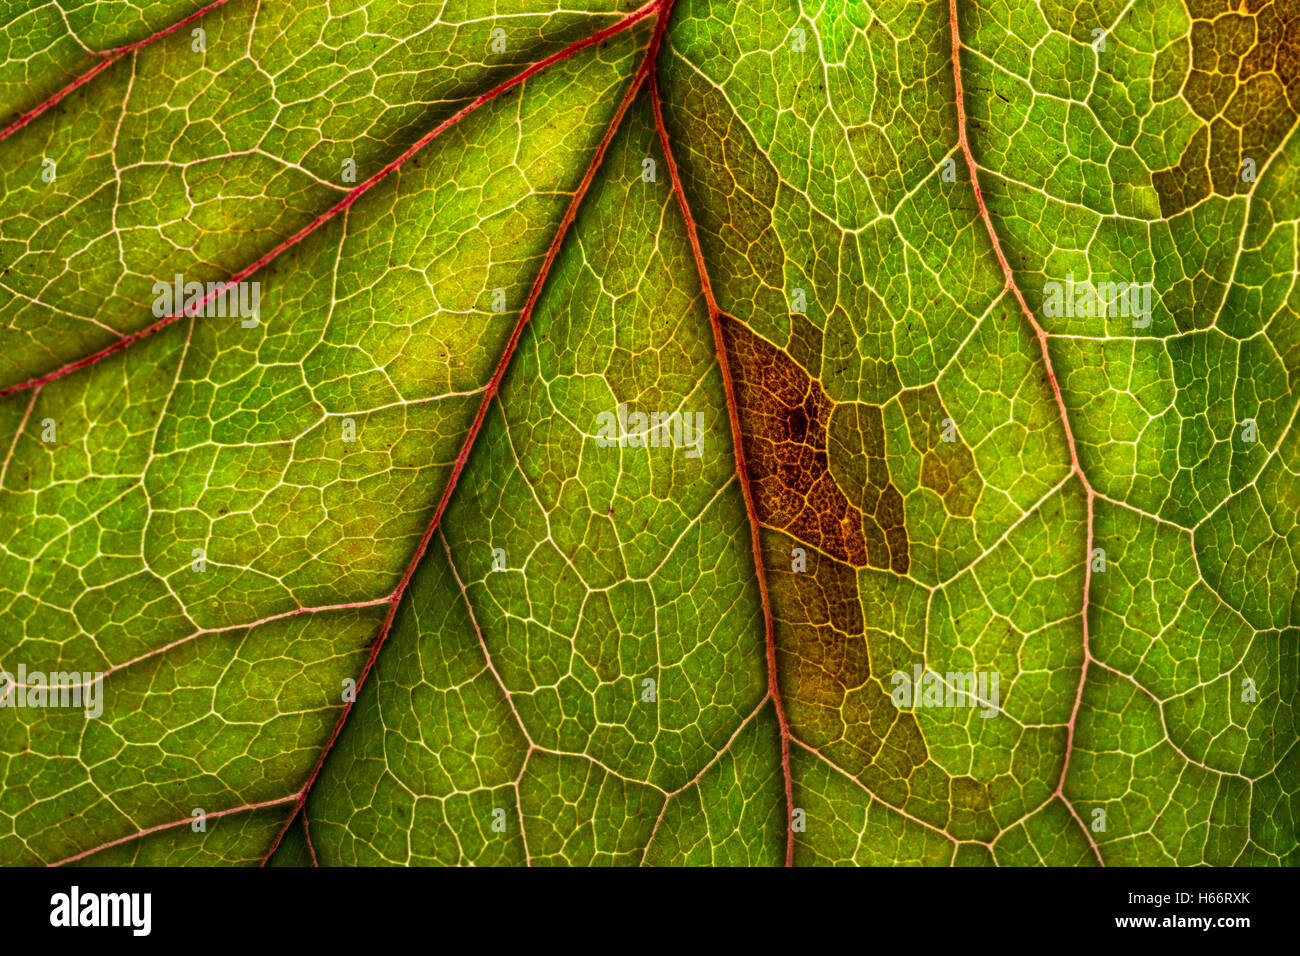 Backlit leaf showing the veins. Stock Photo